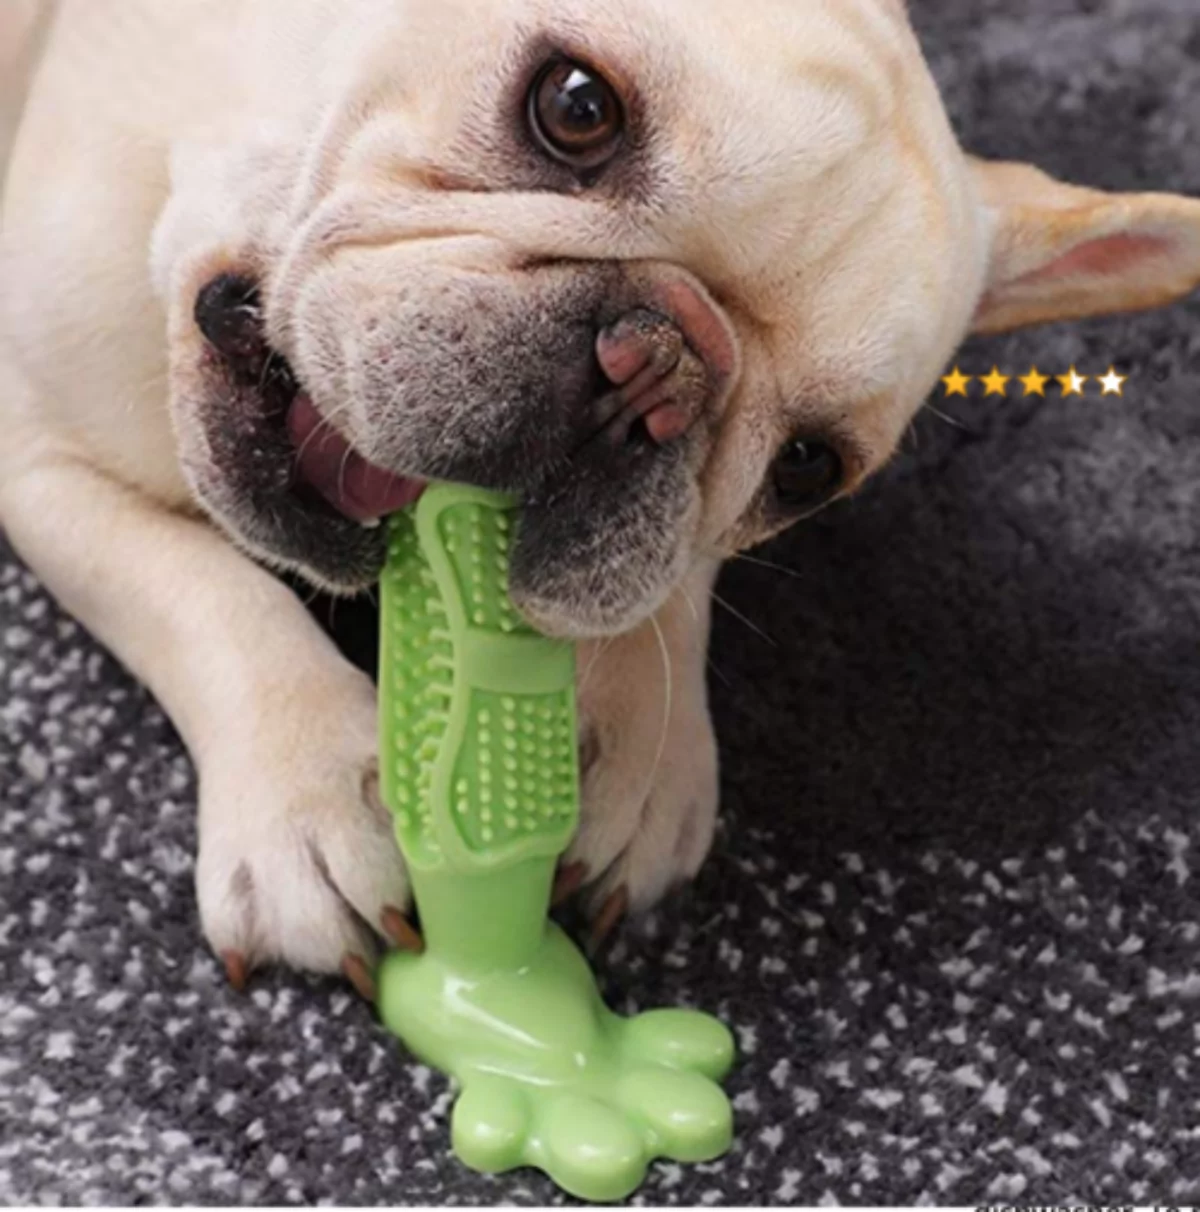 French bulldog enjoying some dog enrichment which helps clean teeth